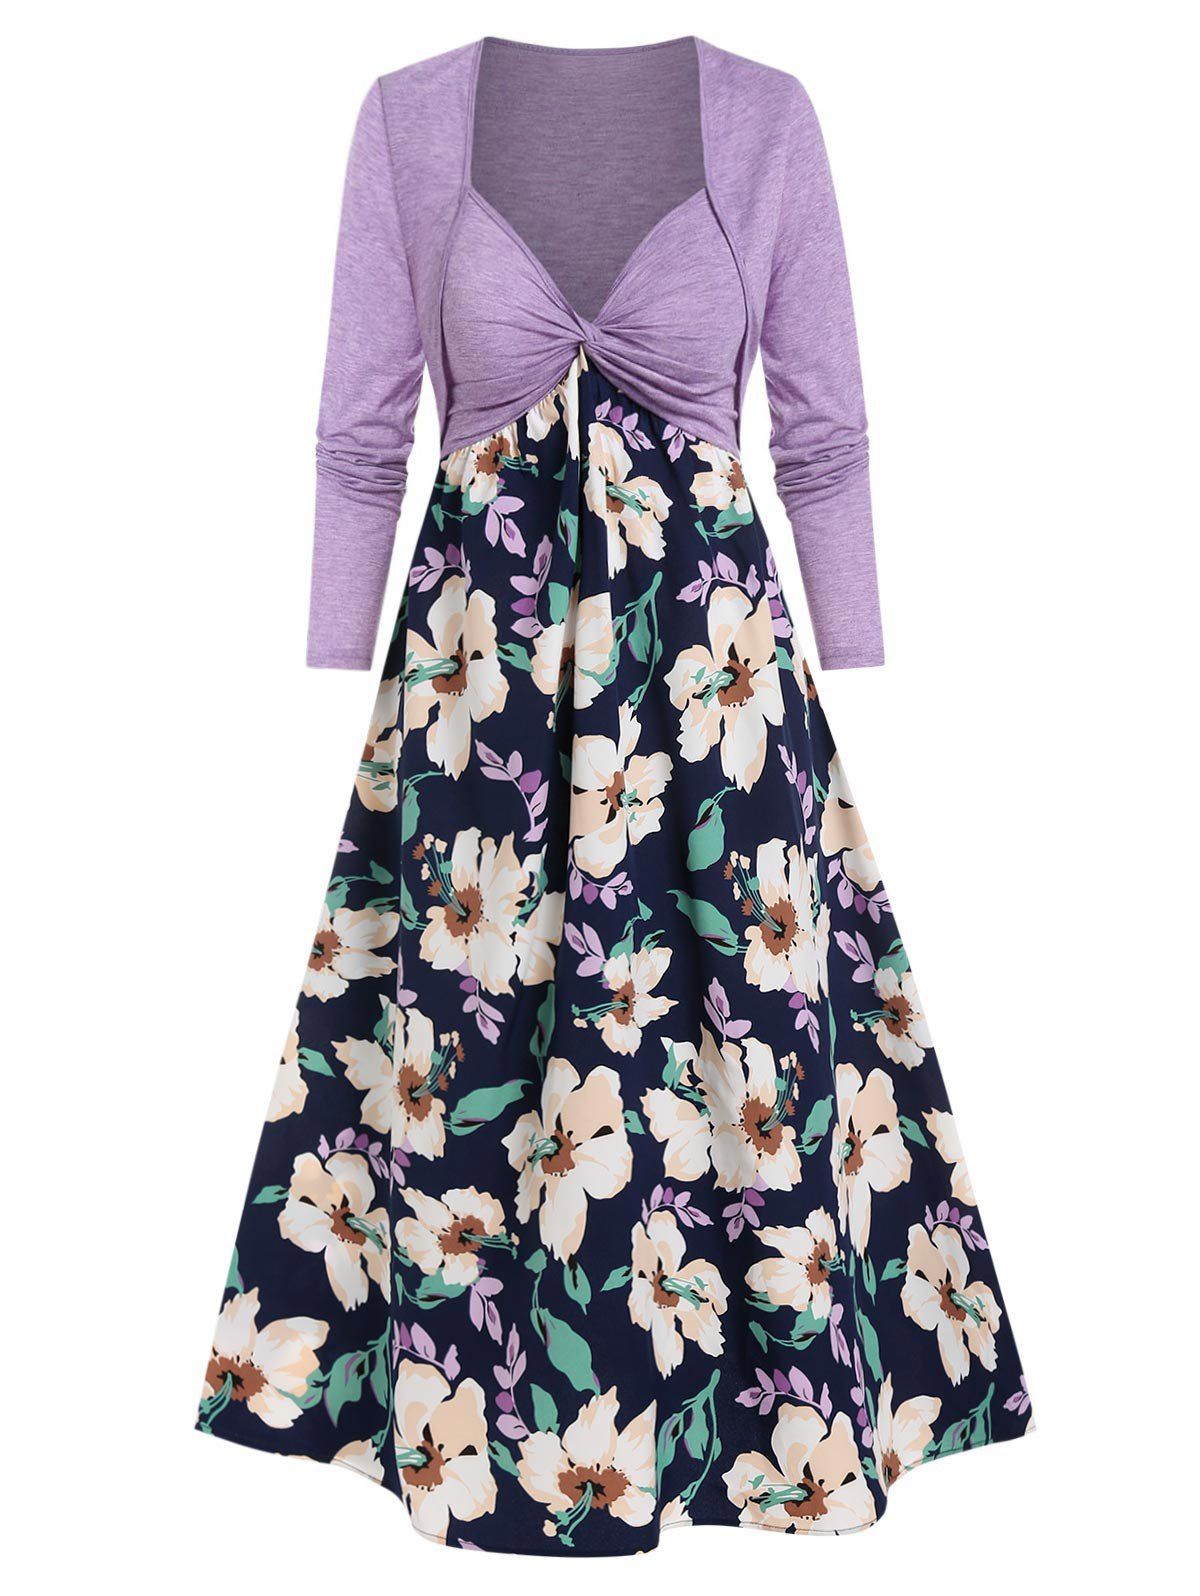 Flower Print Twist Front Cami Dress and Cropped Cardigan - LIGHT PURPLE XL